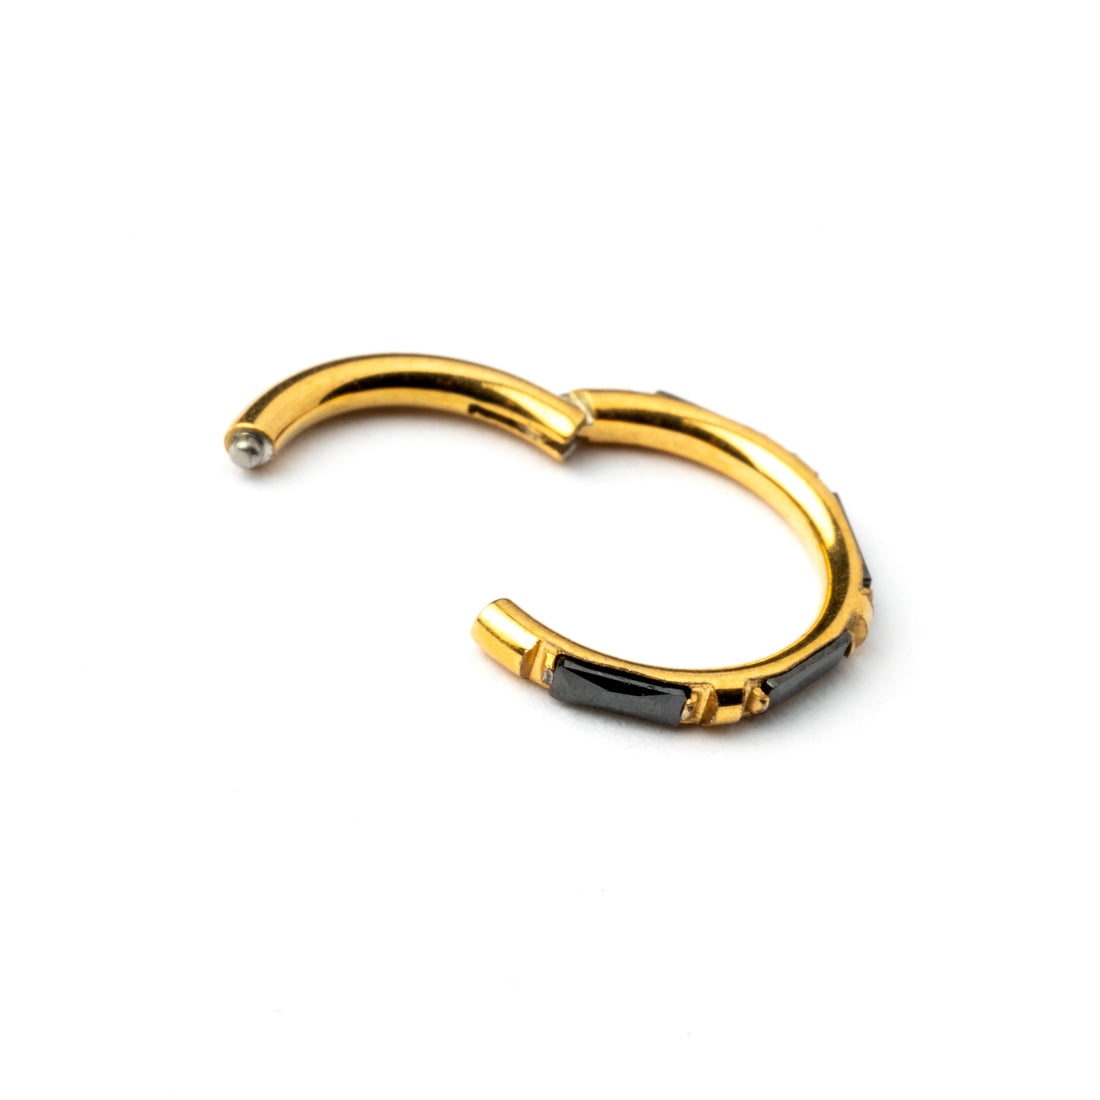 Gold septum clicker with black onyx stones around its rim closure view